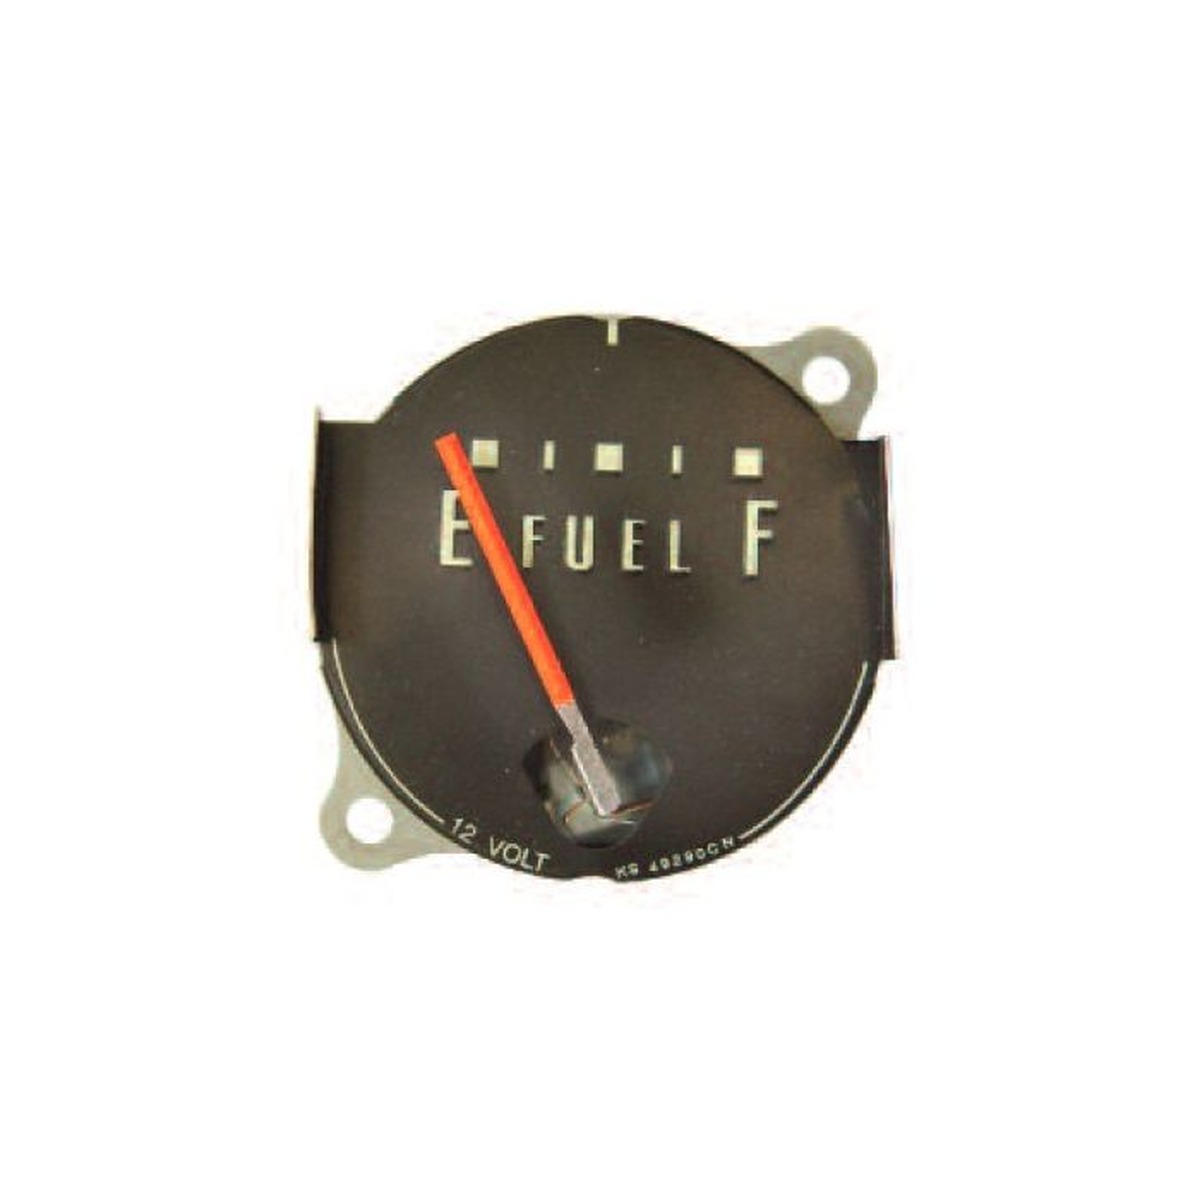 Electrical - Fuel gauge - 1956 F100